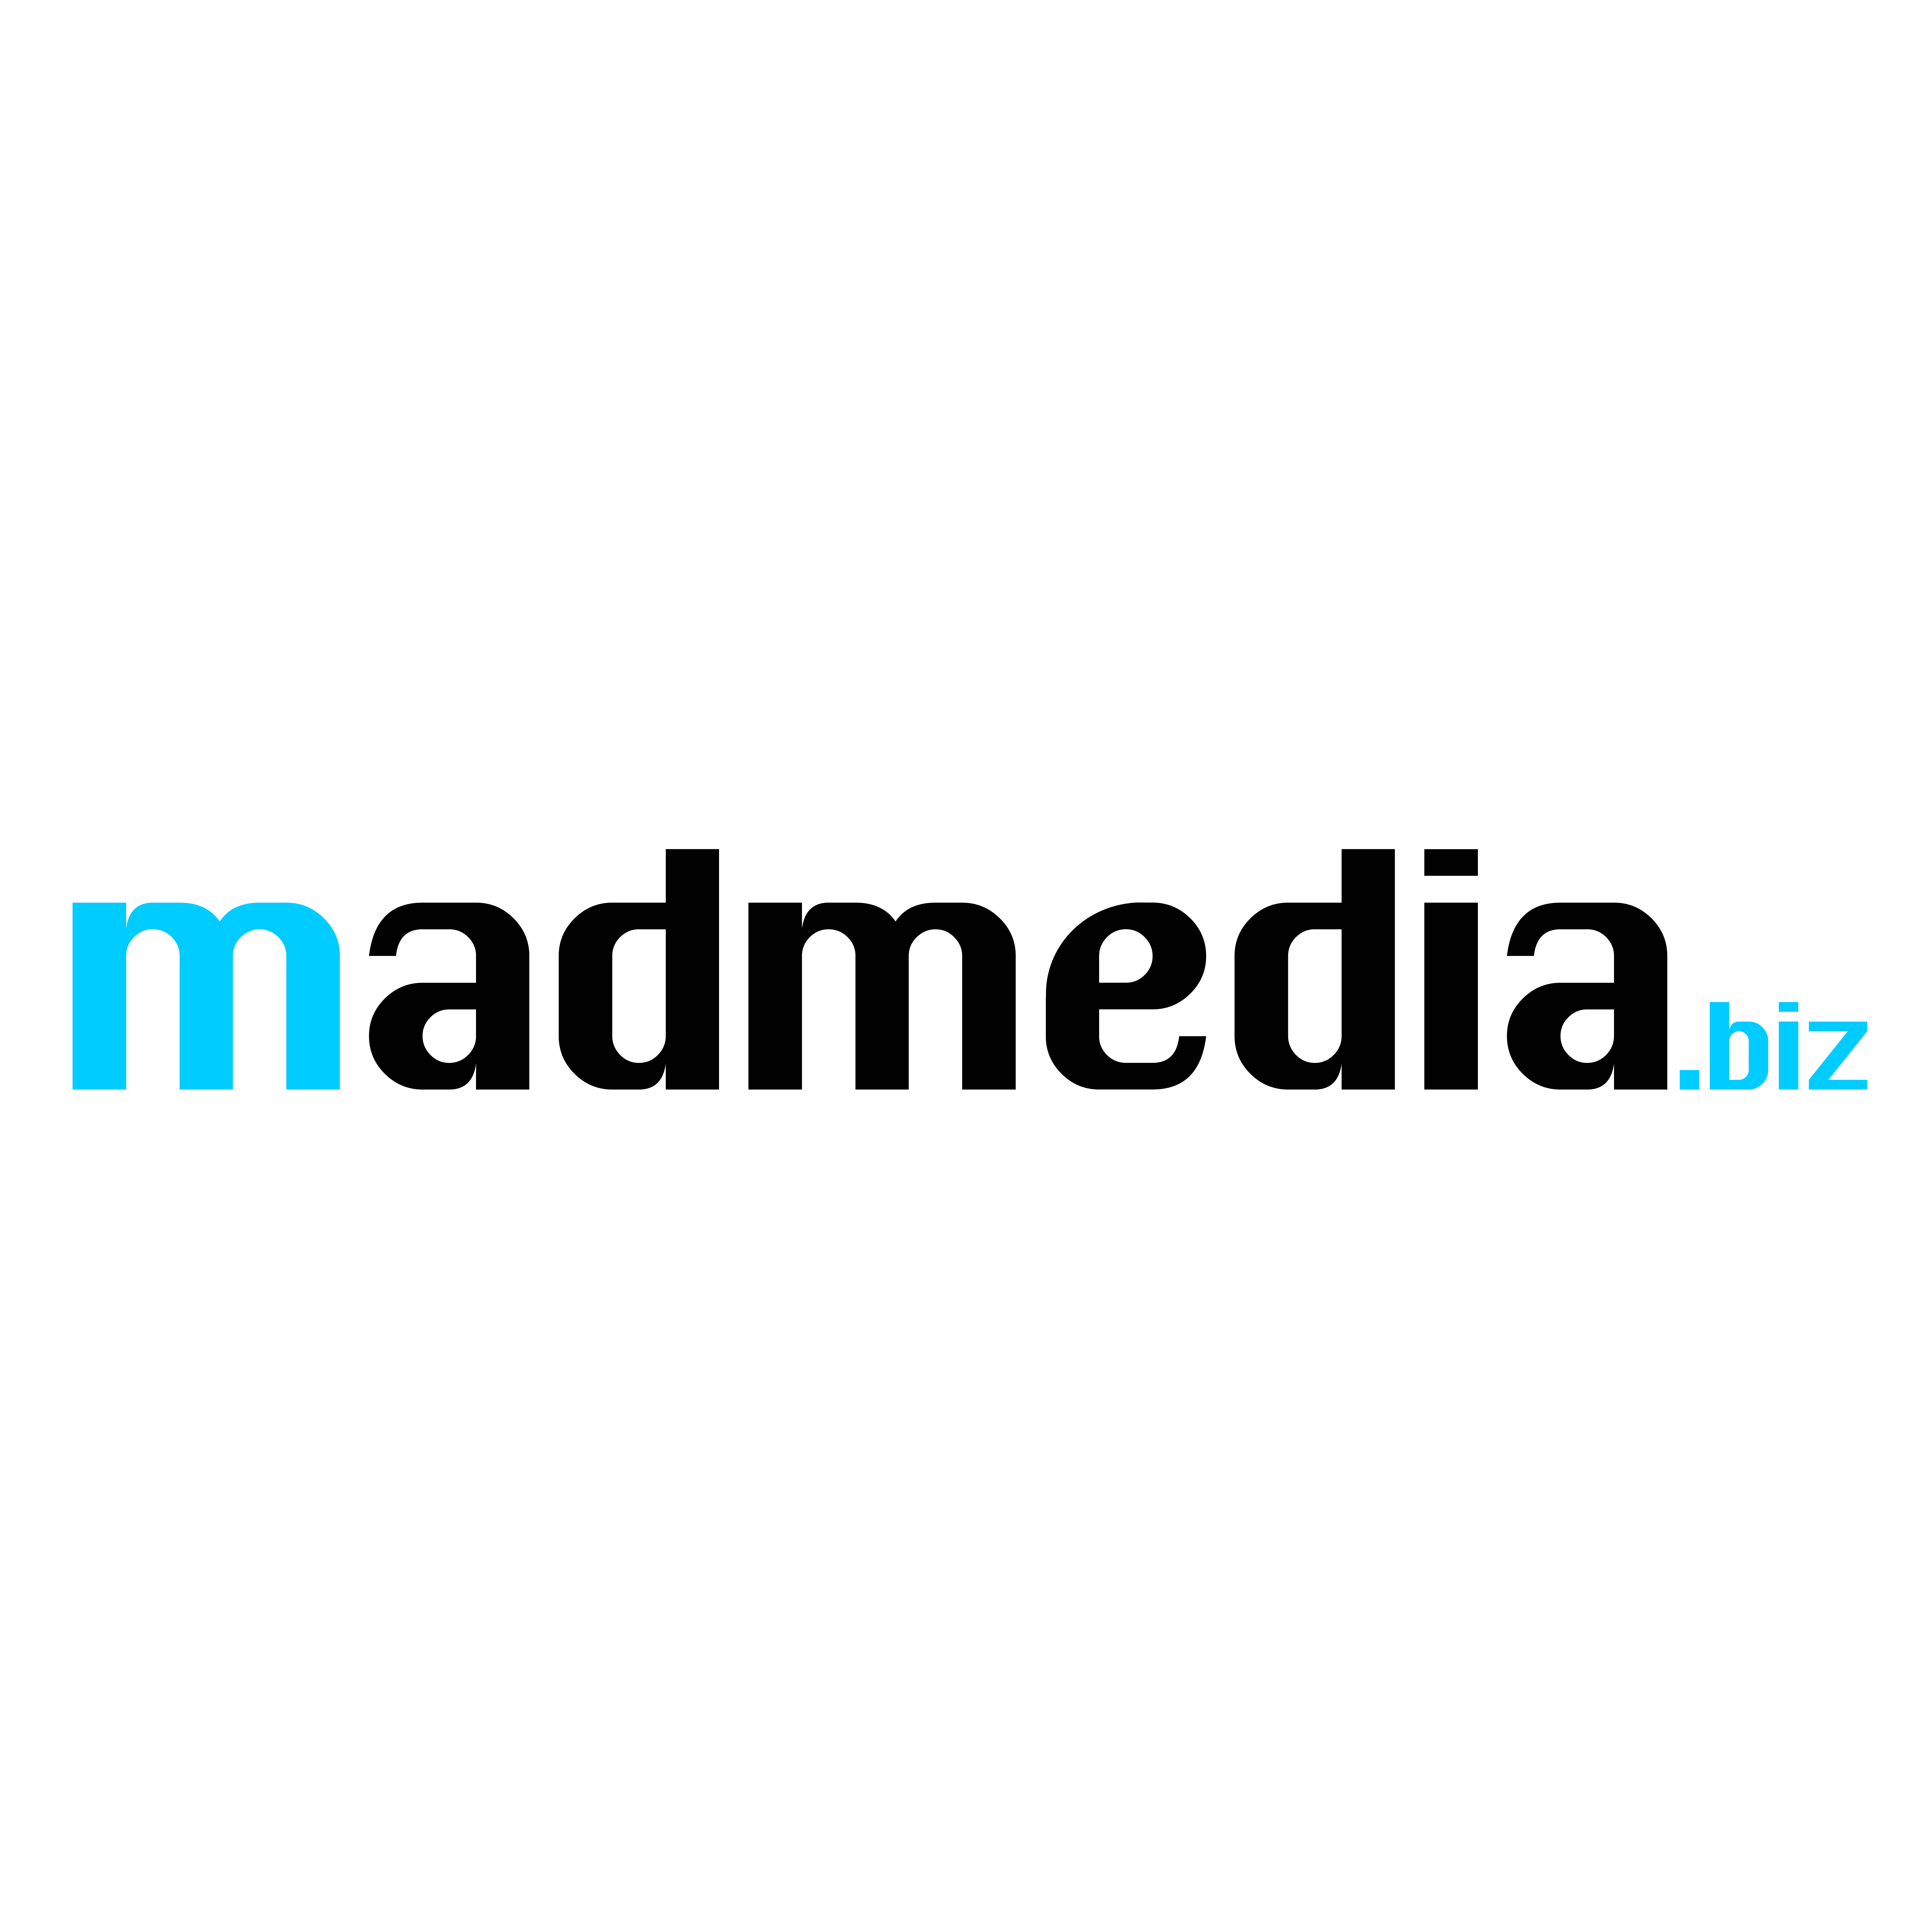 madmedia.biz in Döbeln - Logo